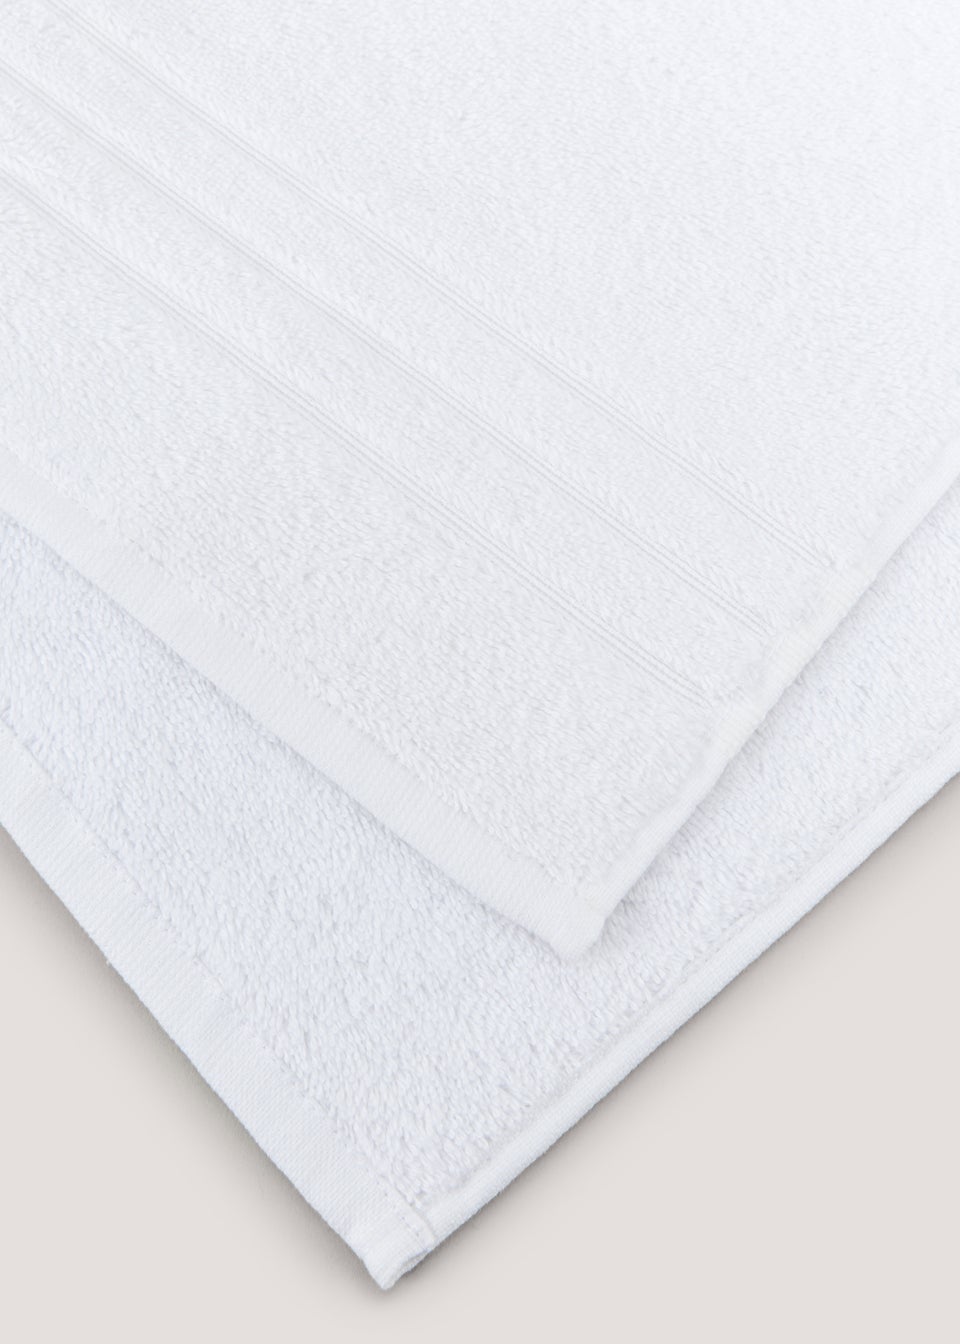 White 100% Egyptian Cotton Towels